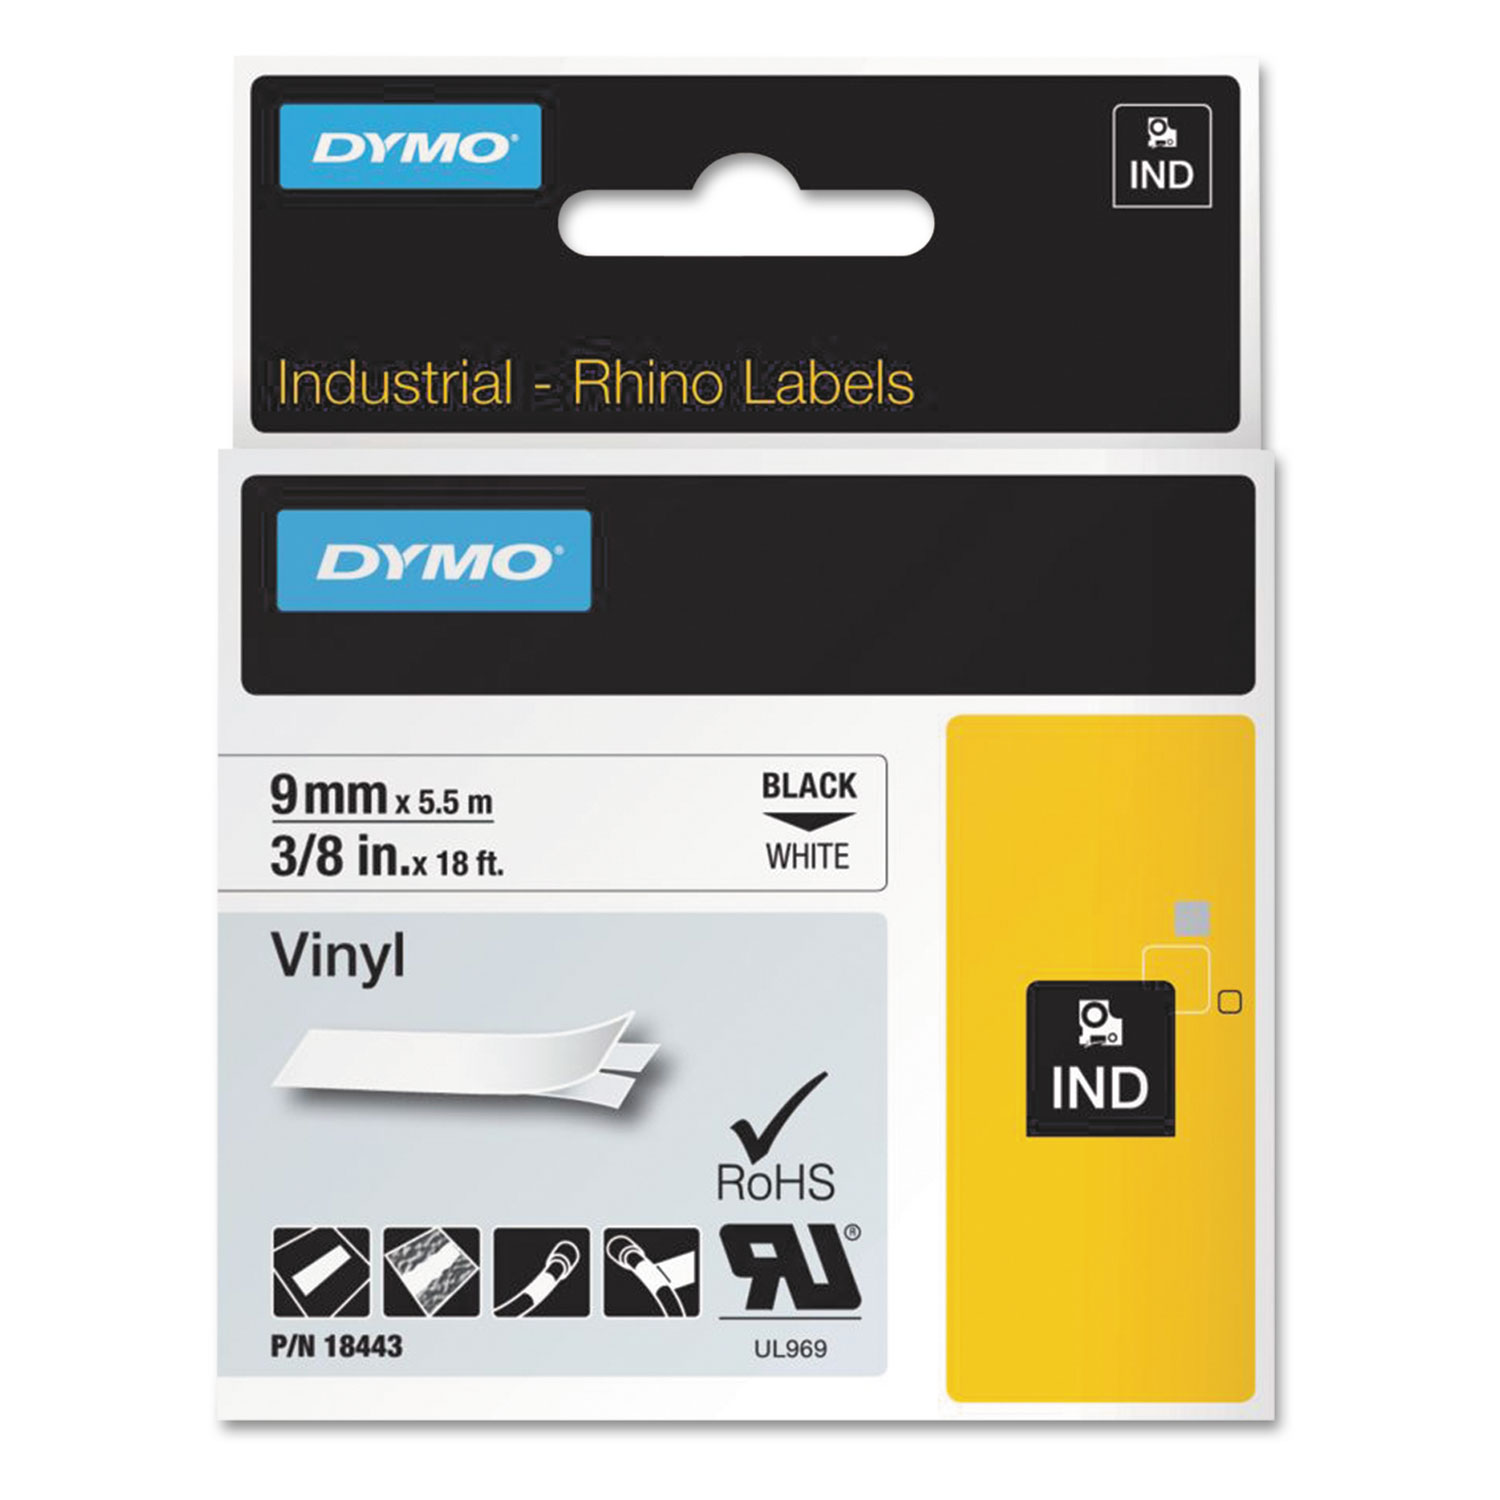  DYMO 18443 Rhino Permanent Vinyl Industrial Label Tape, 0.37 x 18 ft, White/Black Print (DYM18443) 